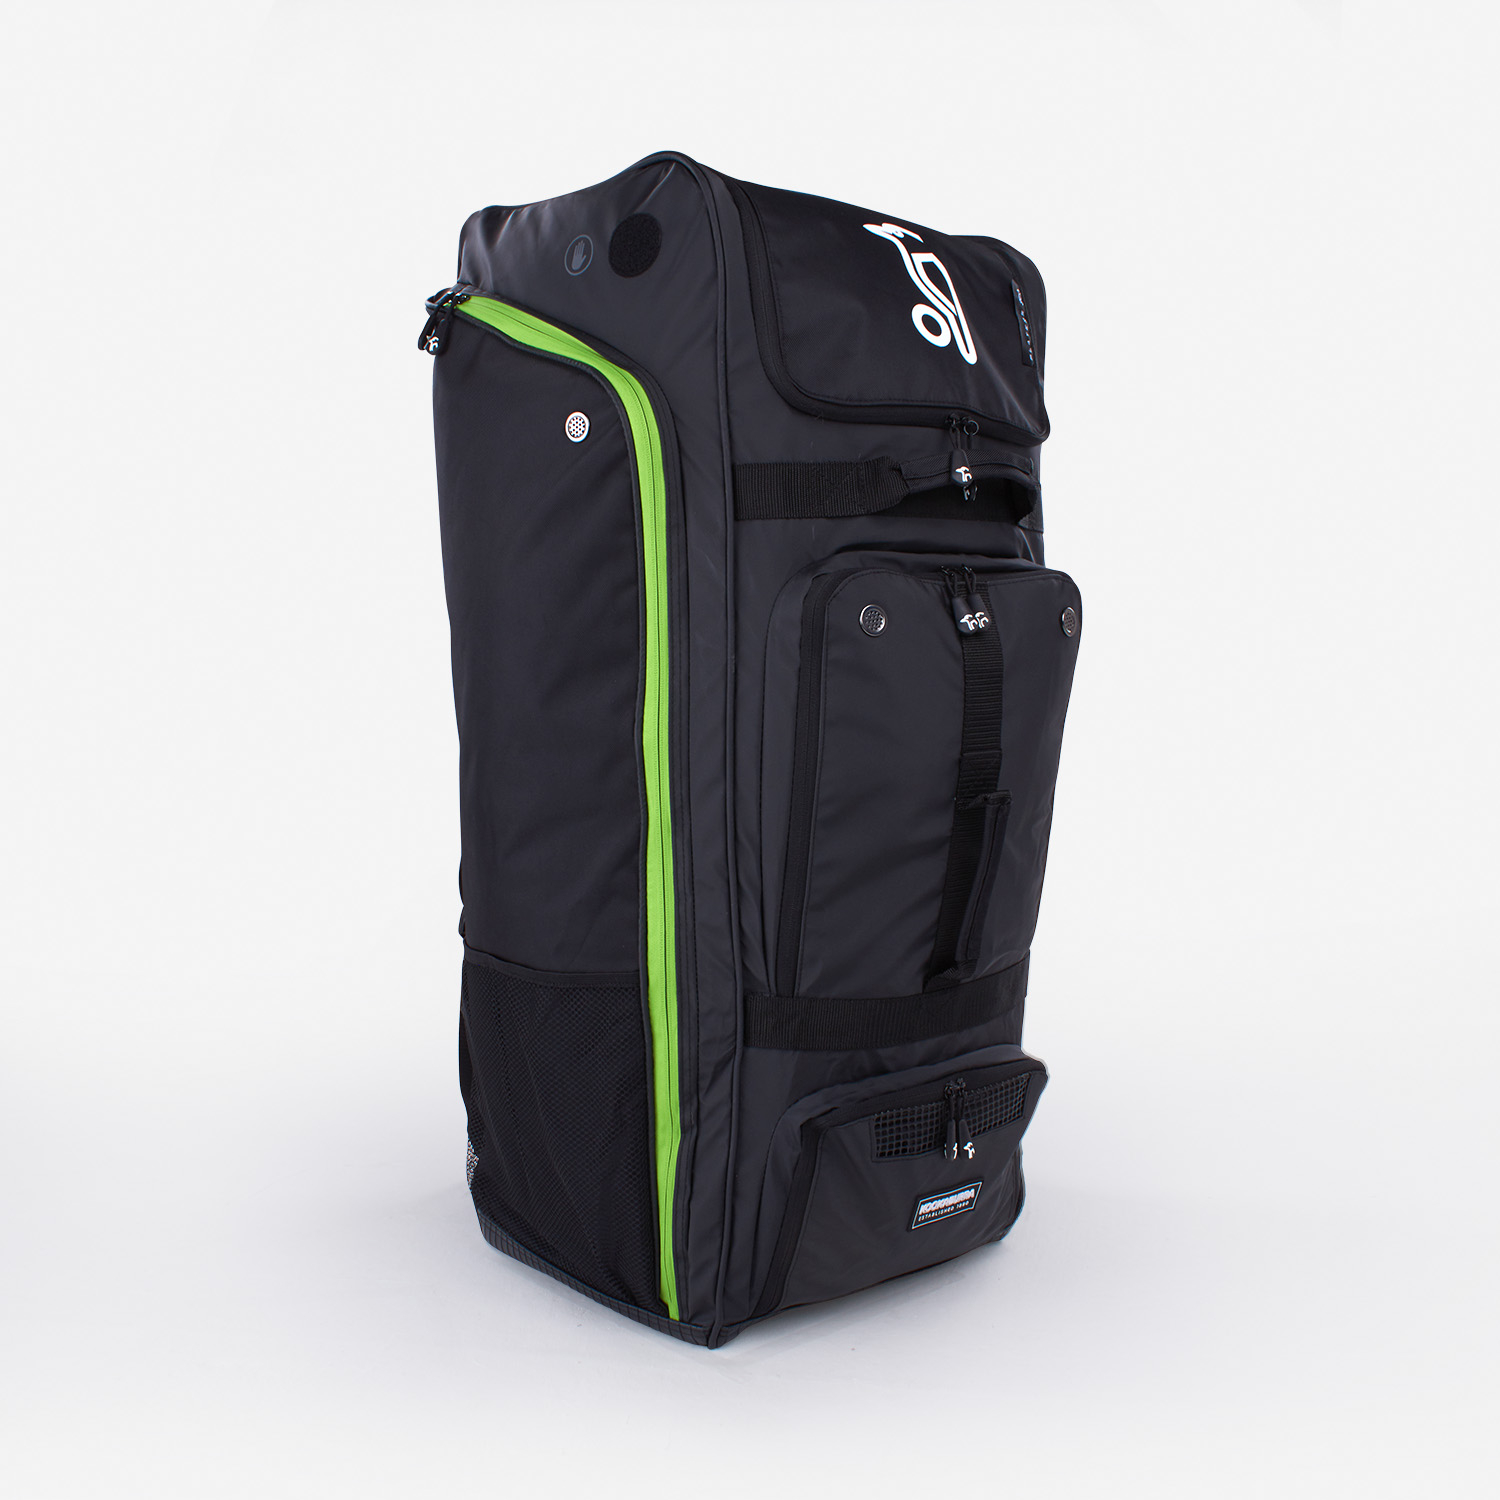 Pro Players Cricket Duffle Bag